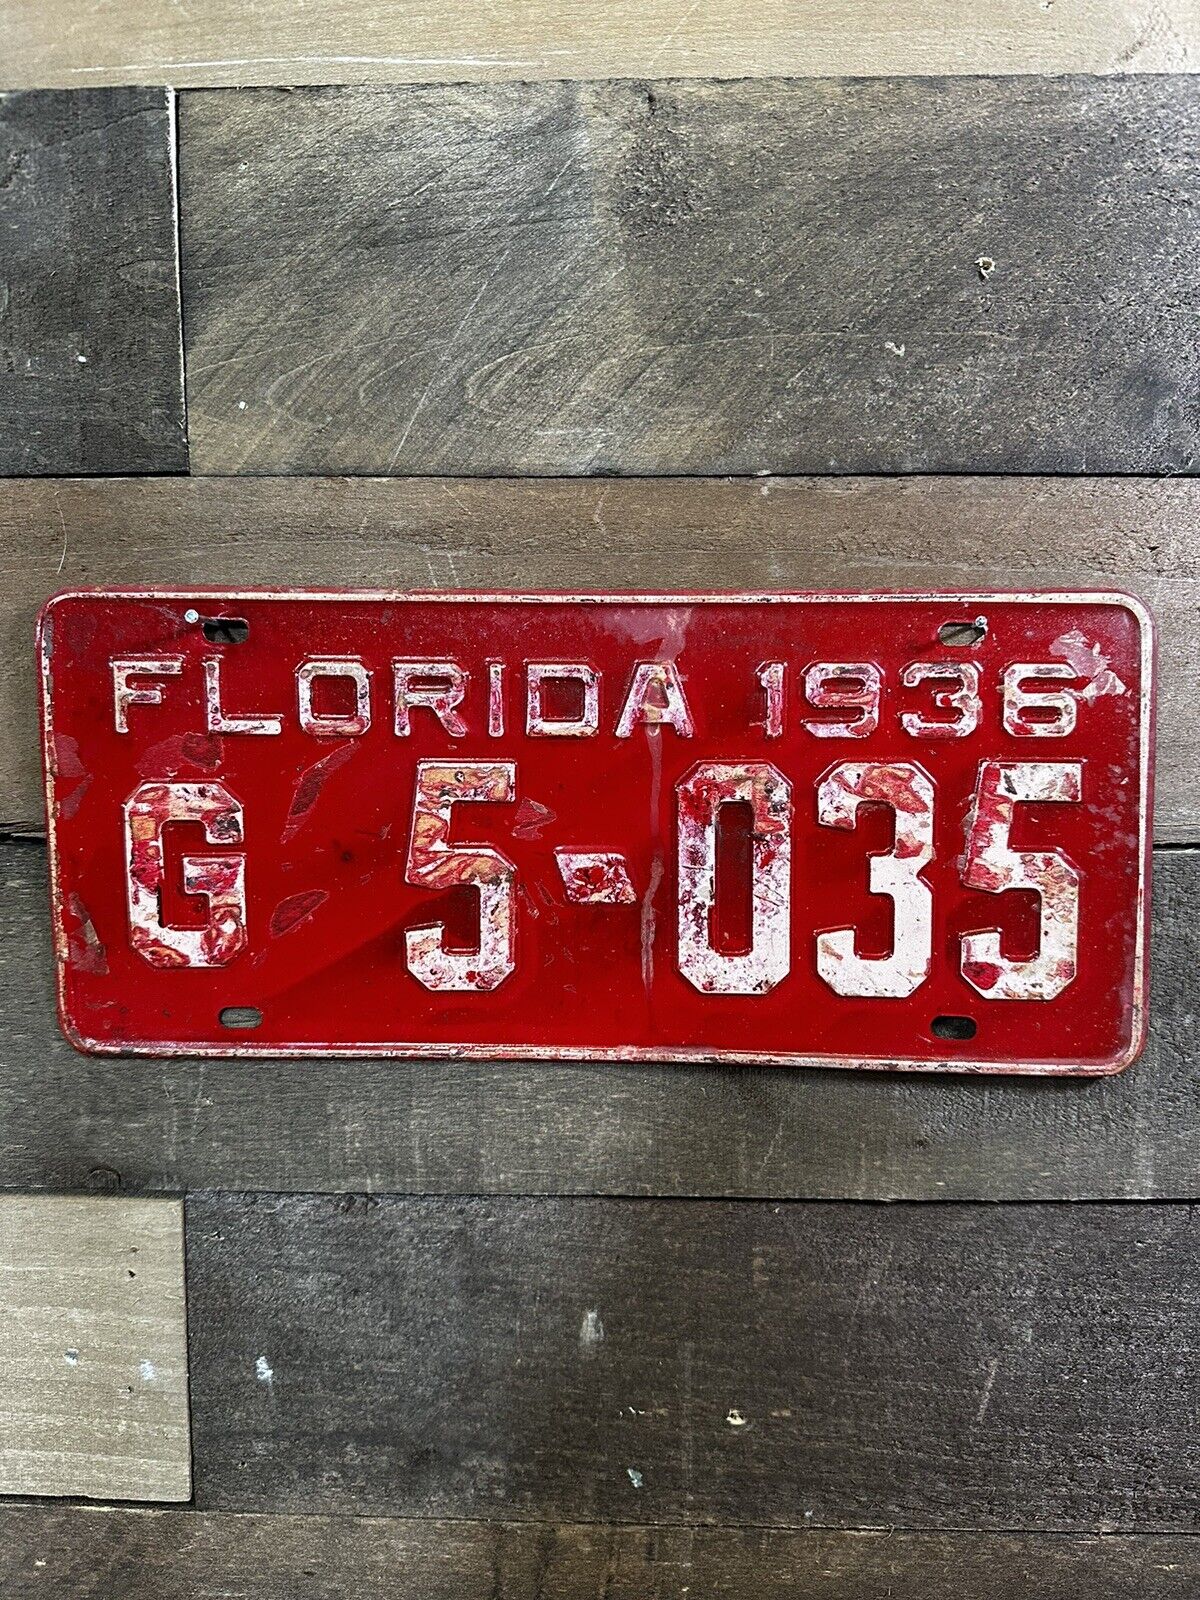 VINTAGE 1936 FLORIDA TAG TRUCK LICENSE PLATE #G 5-035